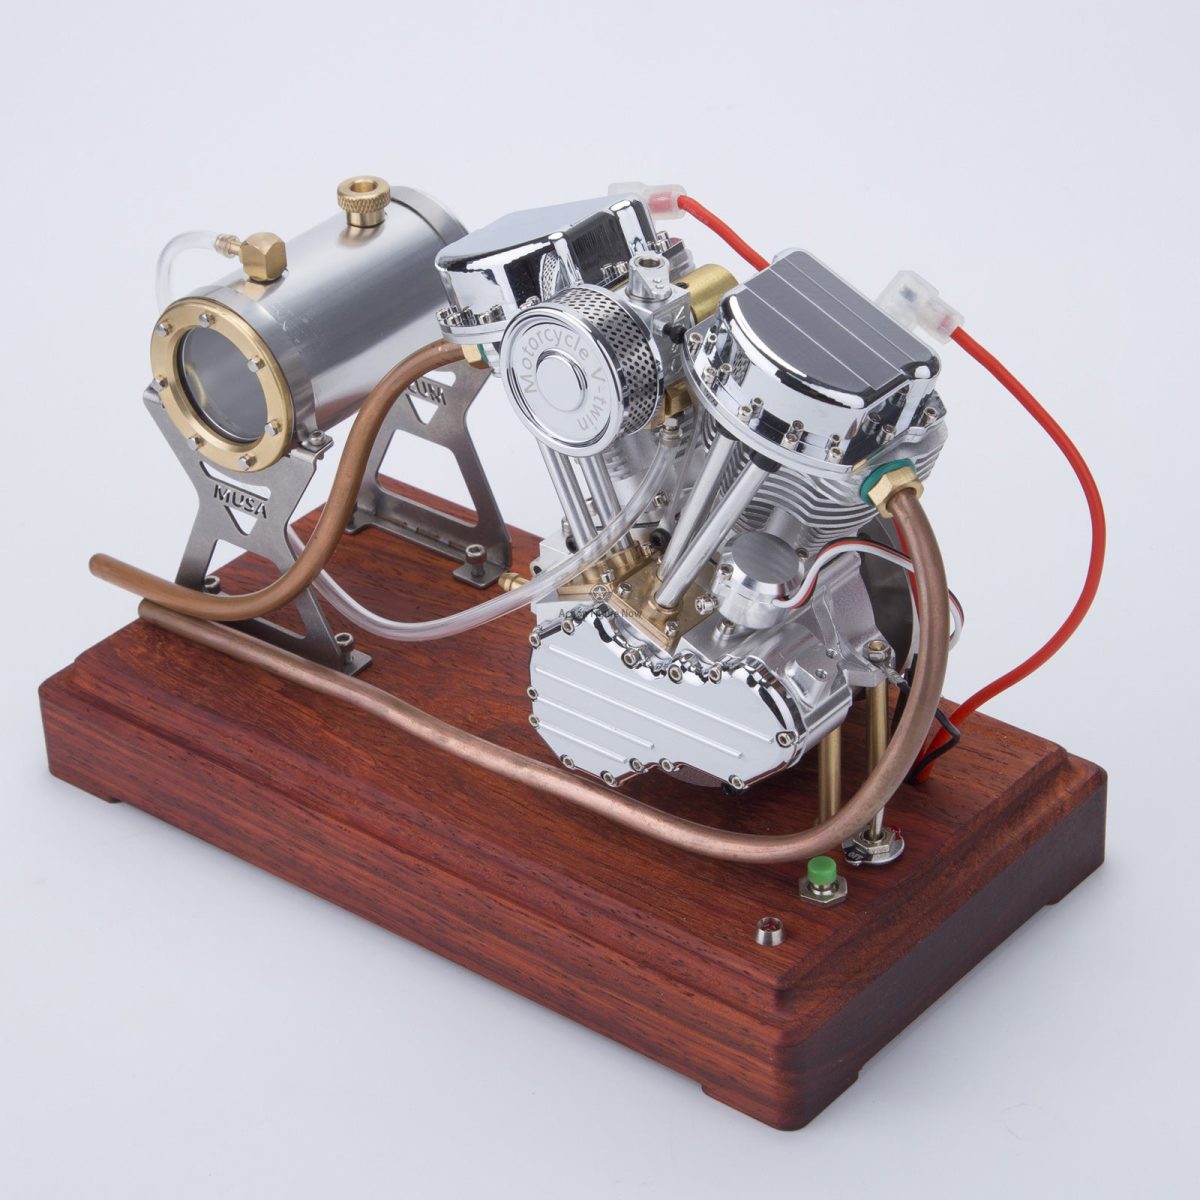 CISON FG-VT9 9cc Gasoline 4-Stroke Air-Cooled V-Twin Engine Upgrade Kit w/ Original Parts